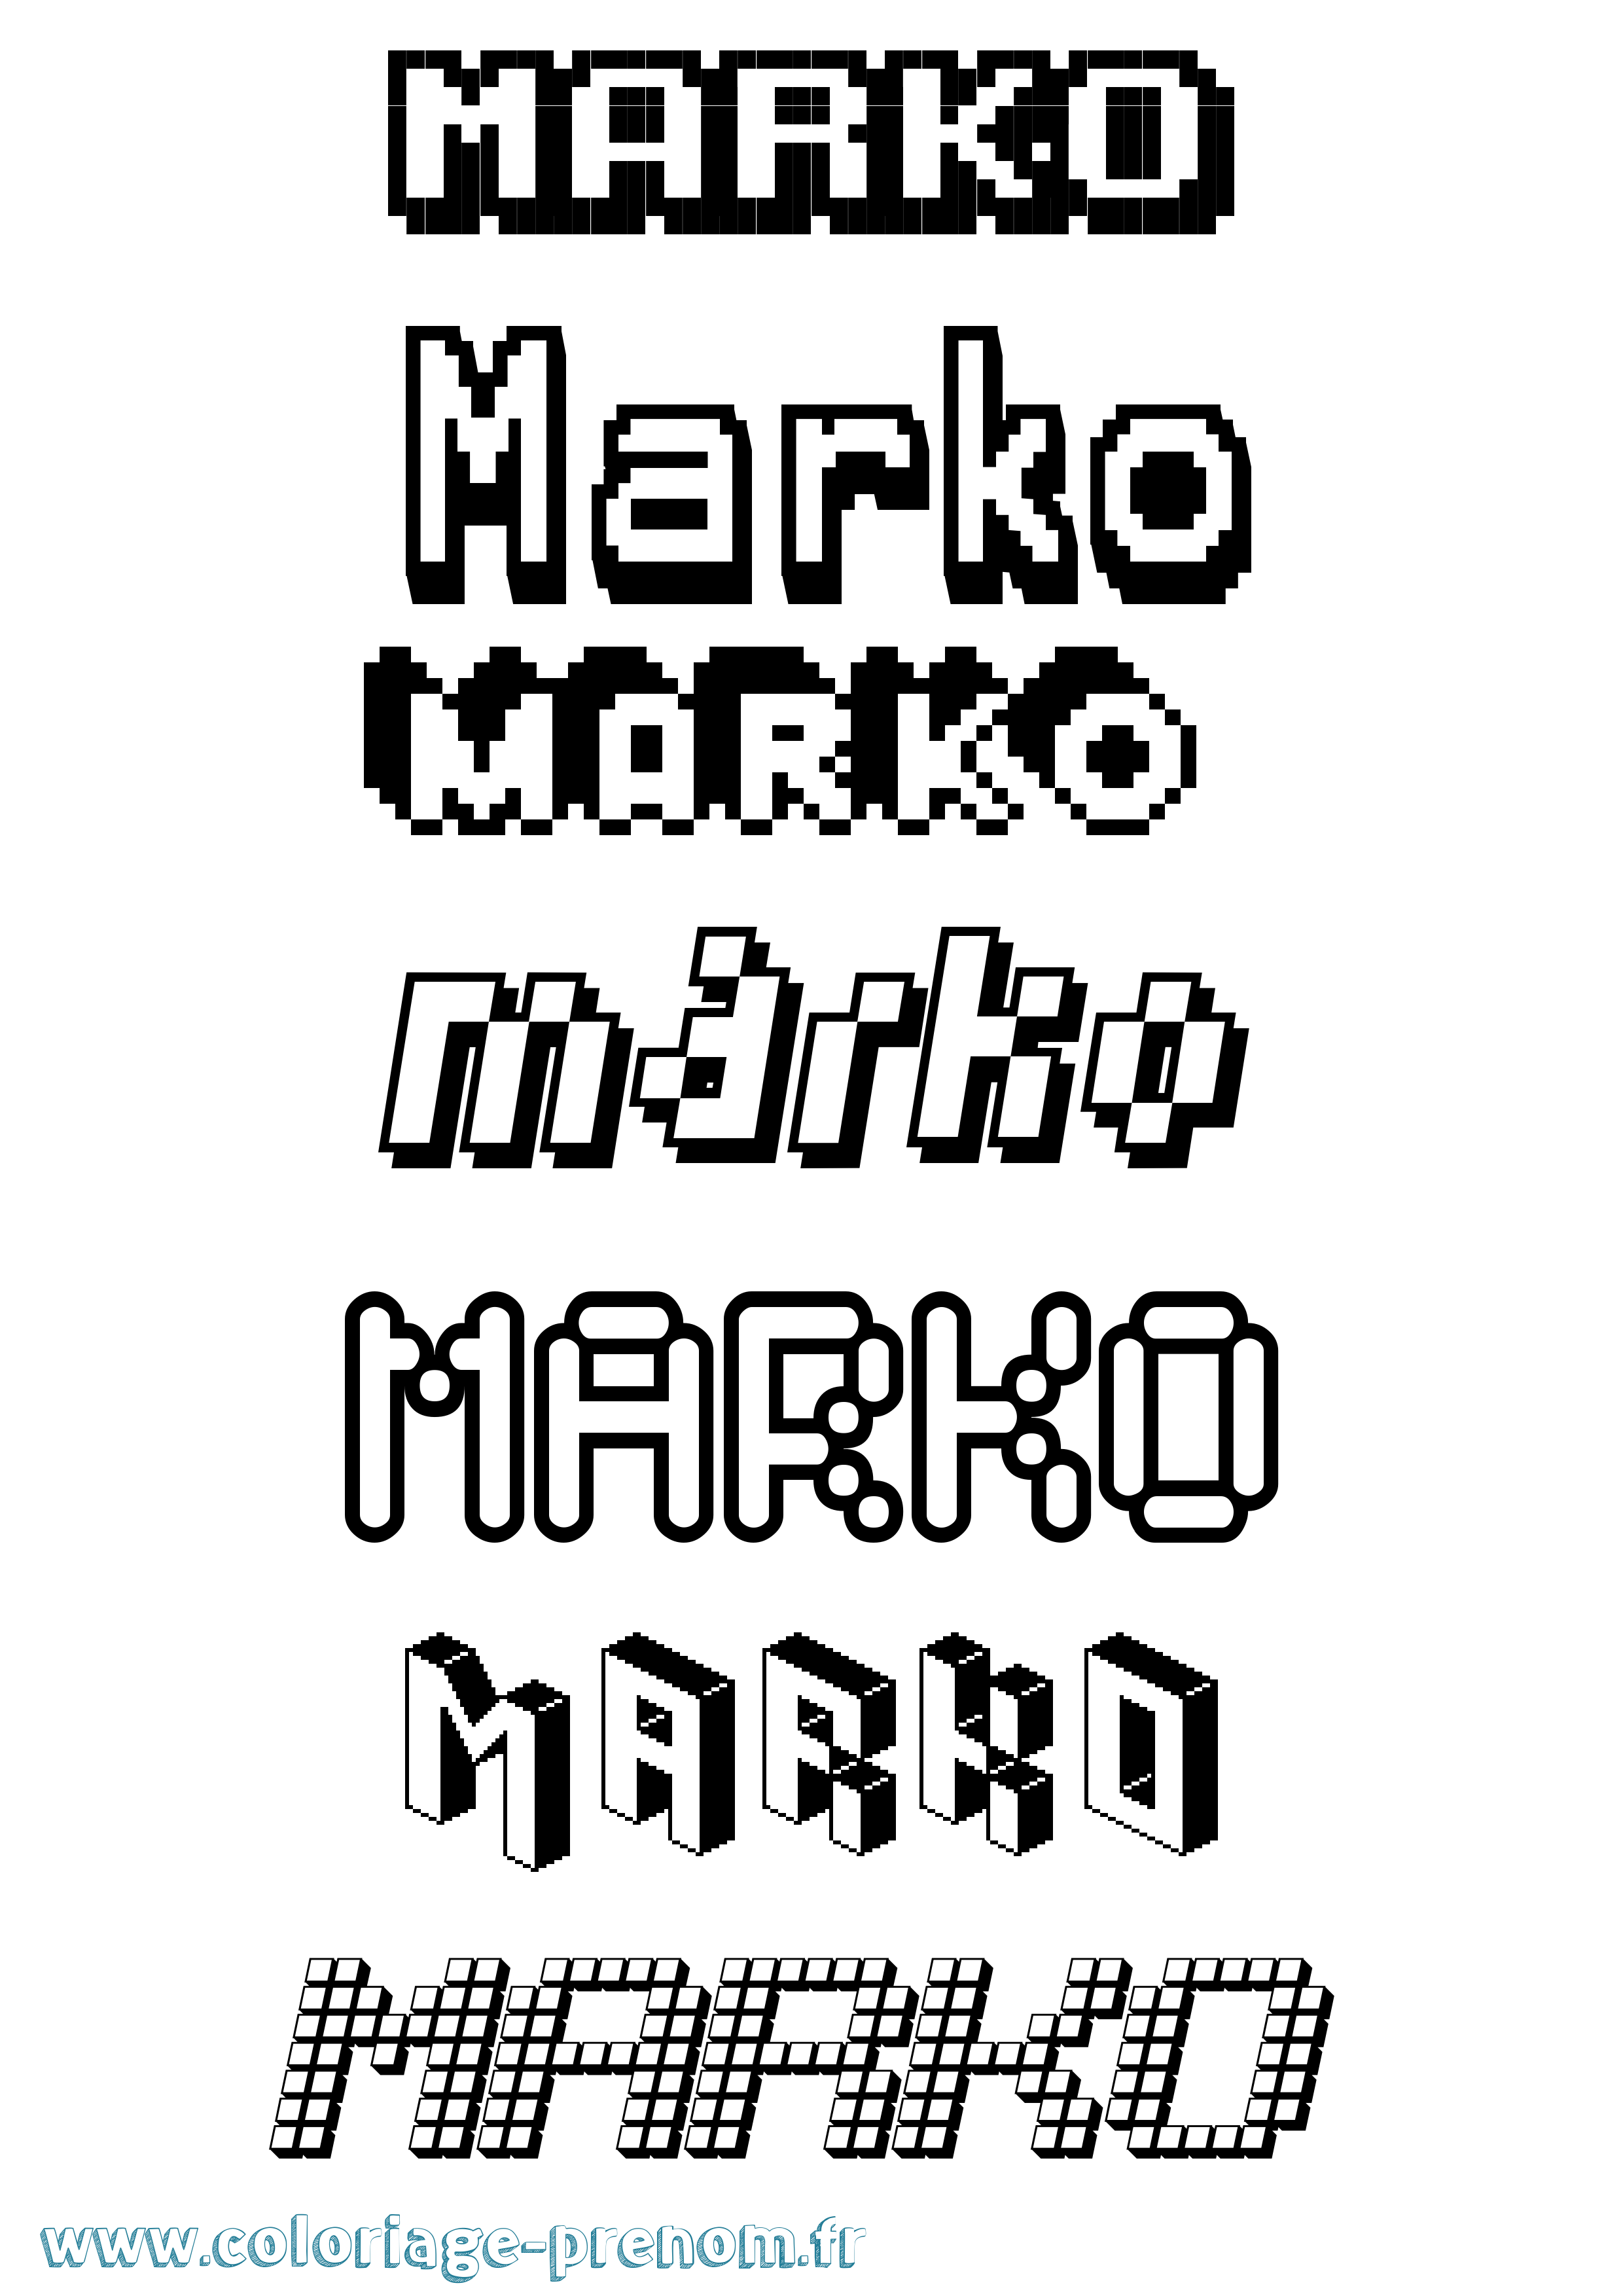 Coloriage prénom Marko